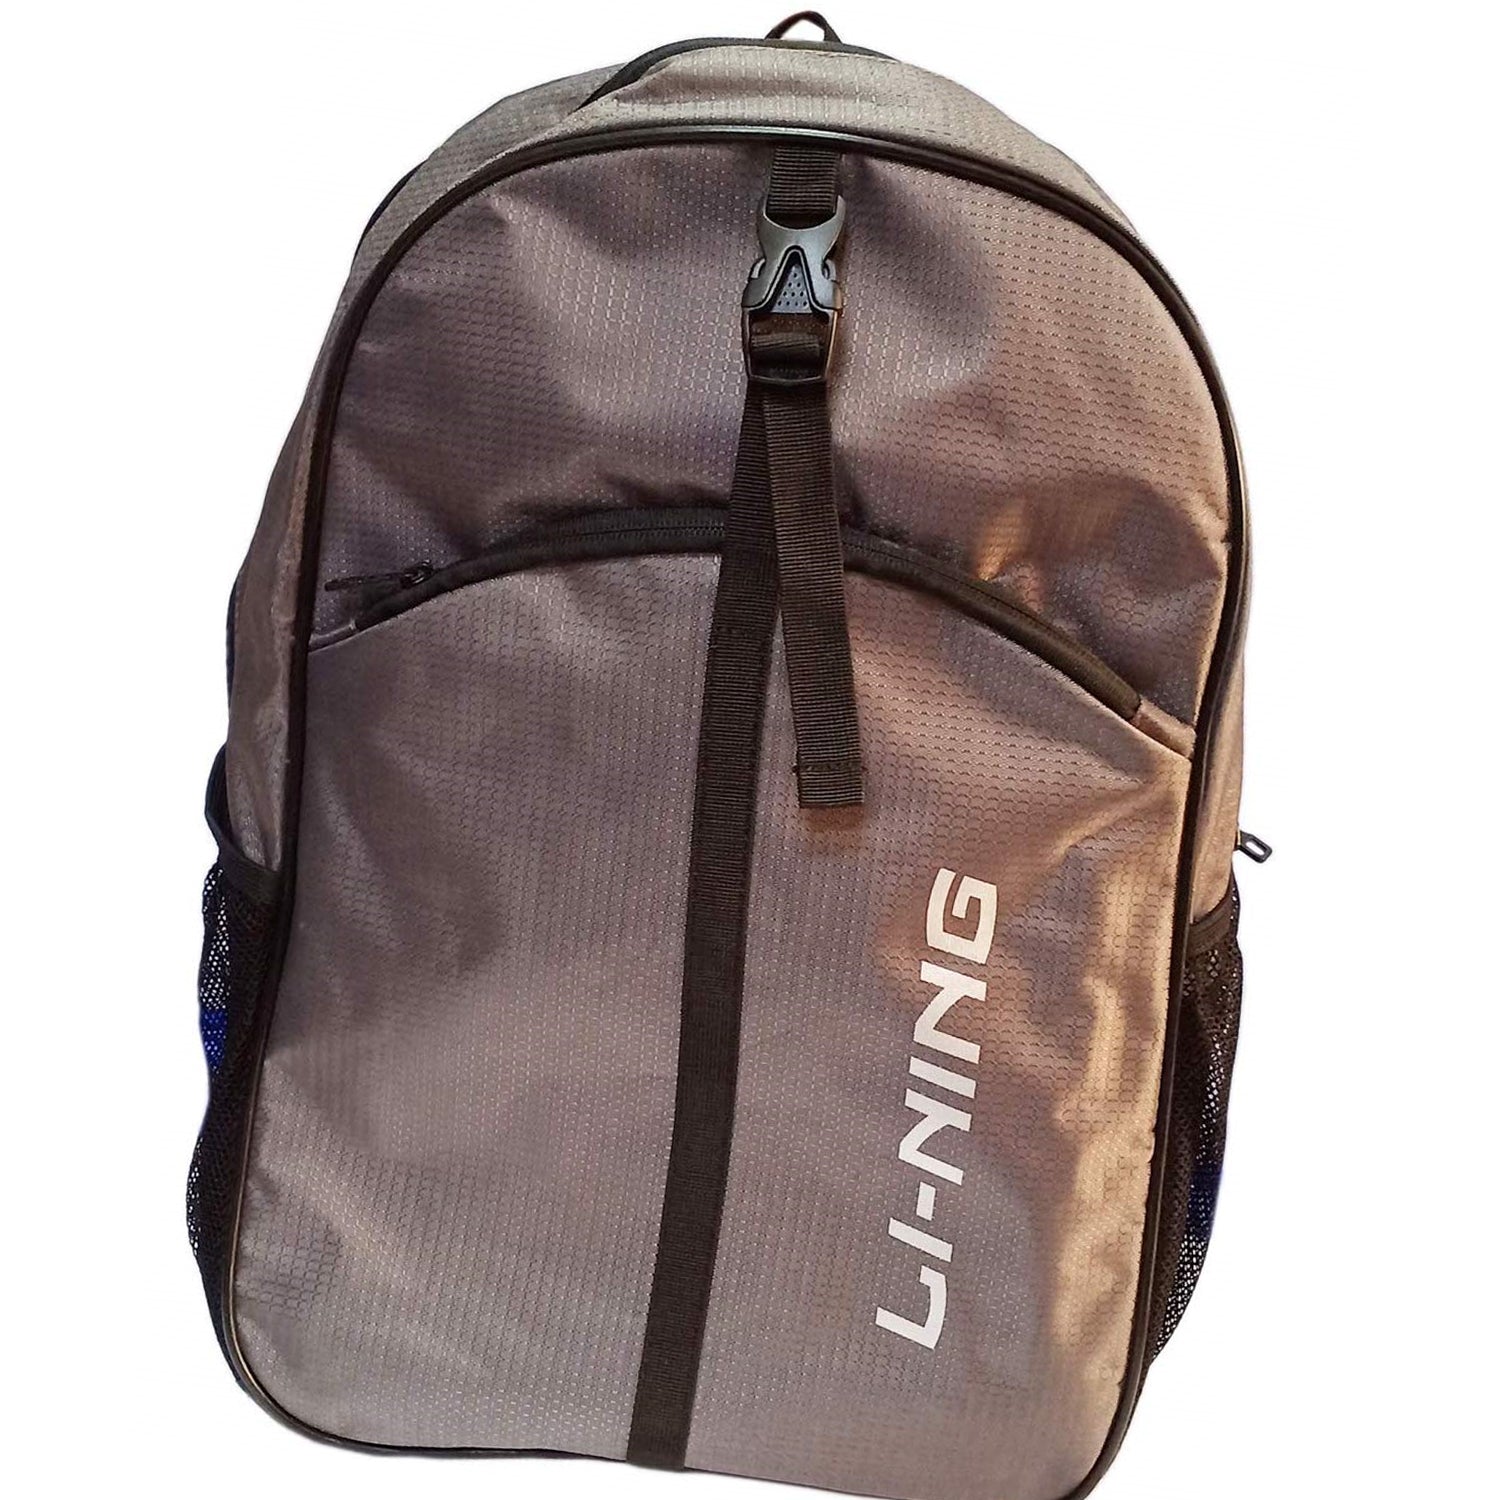 Li-Ning Sports Kitbag - Dark Grey - Best Price online Prokicksports.com